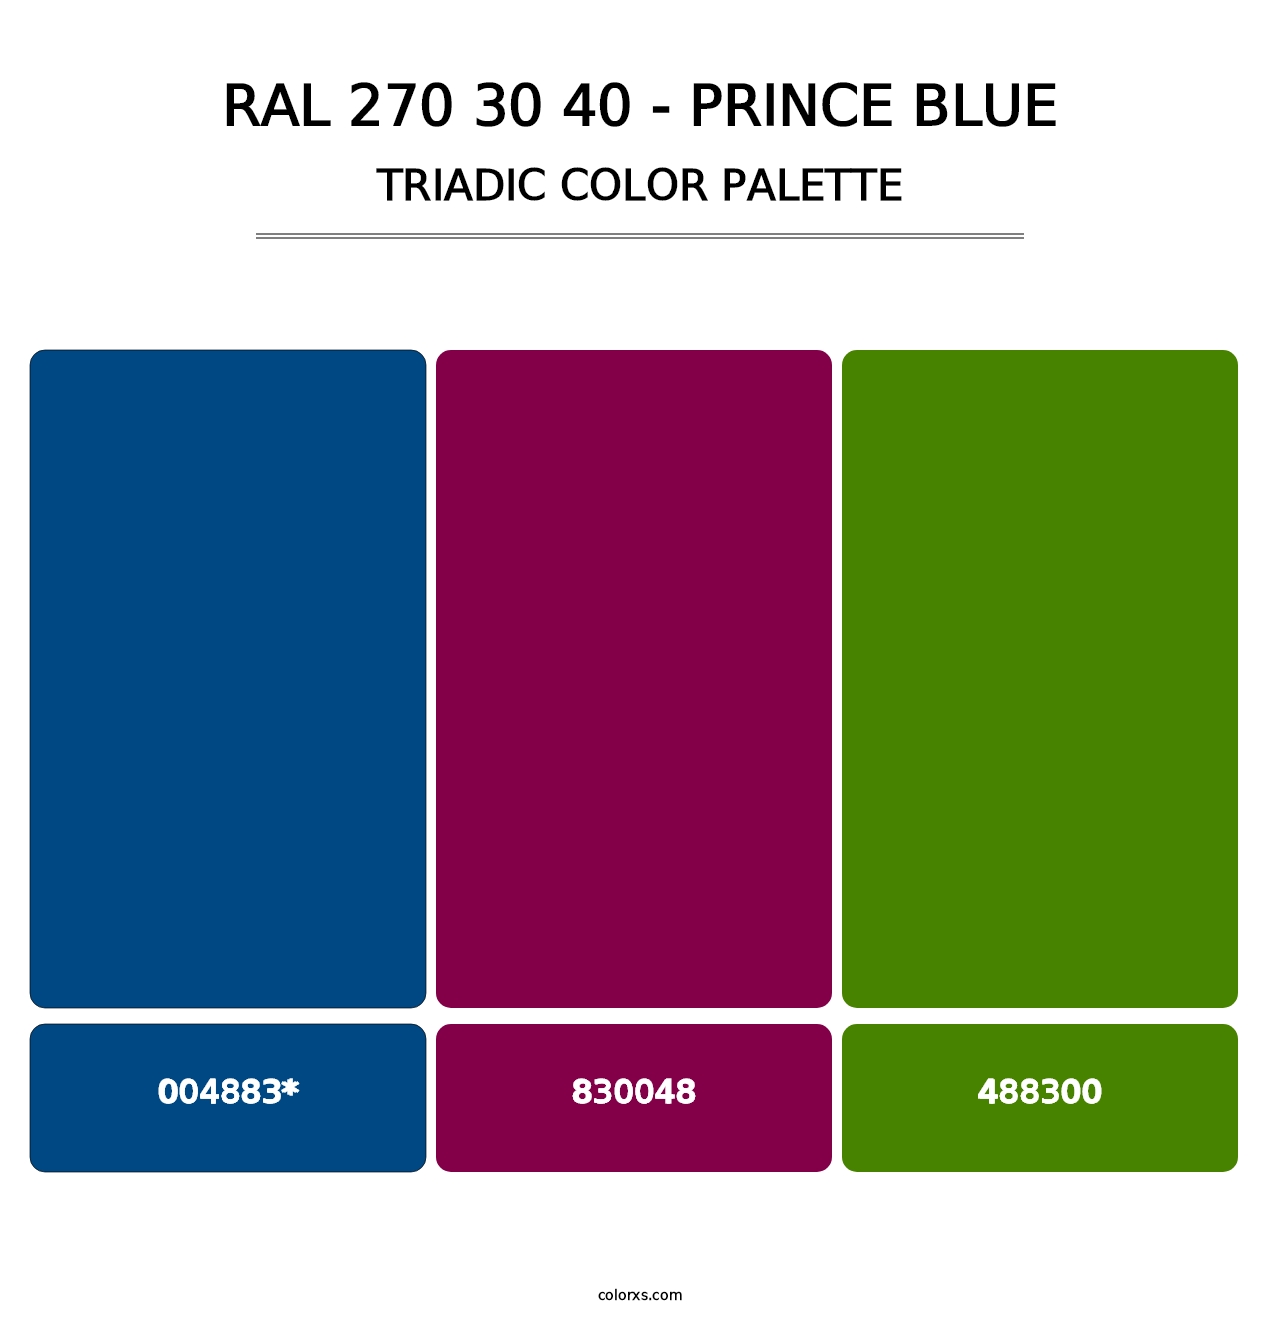 RAL 270 30 40 - Prince Blue - Triadic Color Palette